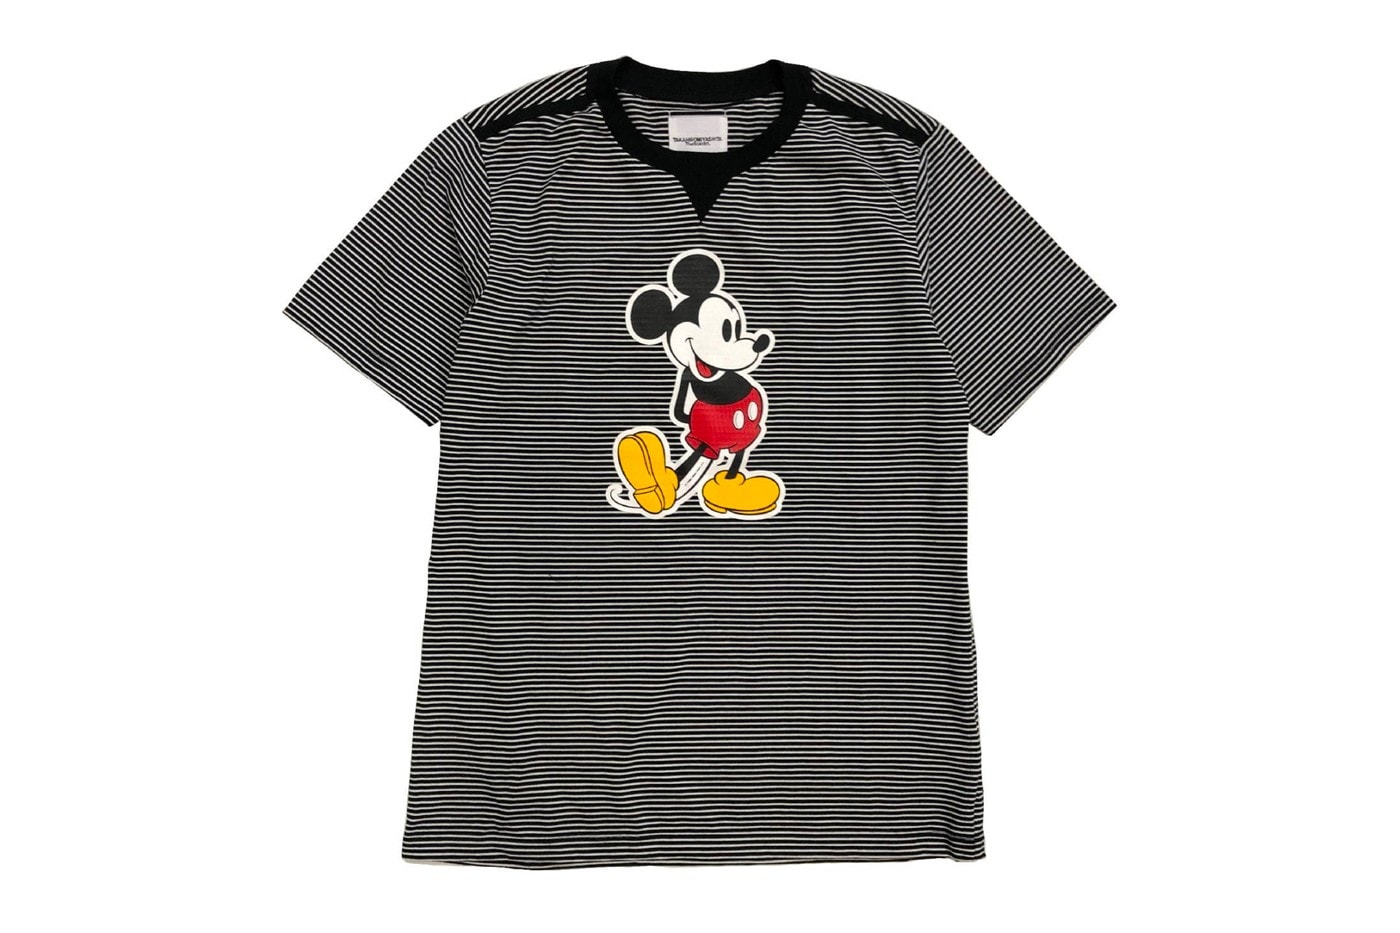 TAKAHIROMIYASHITATheSoloist. 推出條紋 Mickey Mouse 聯名系列服飾